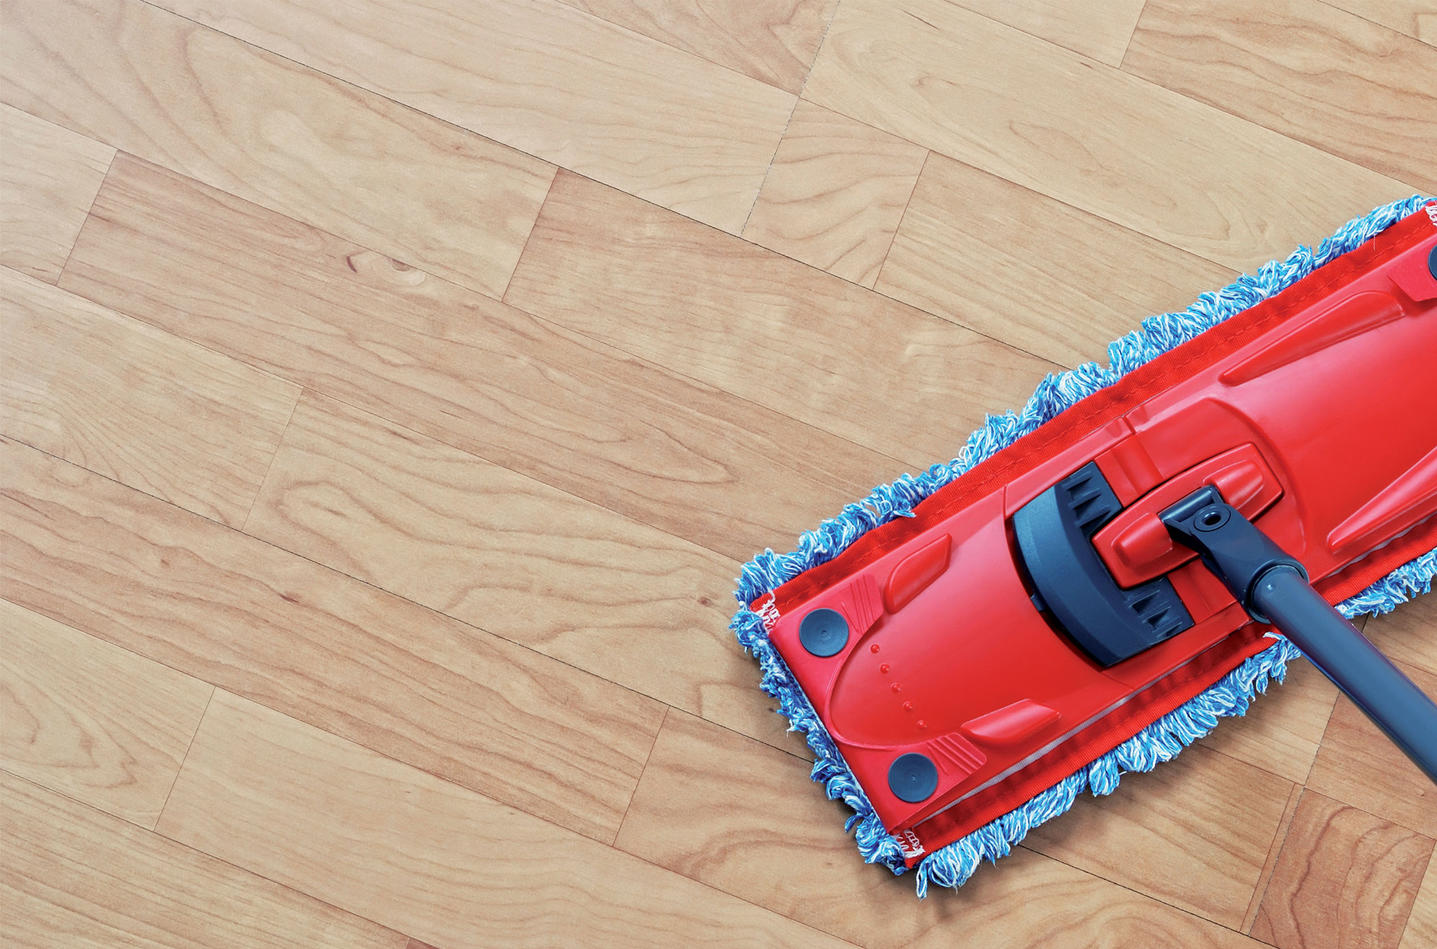 How to clean vinyl floors | Tarkett